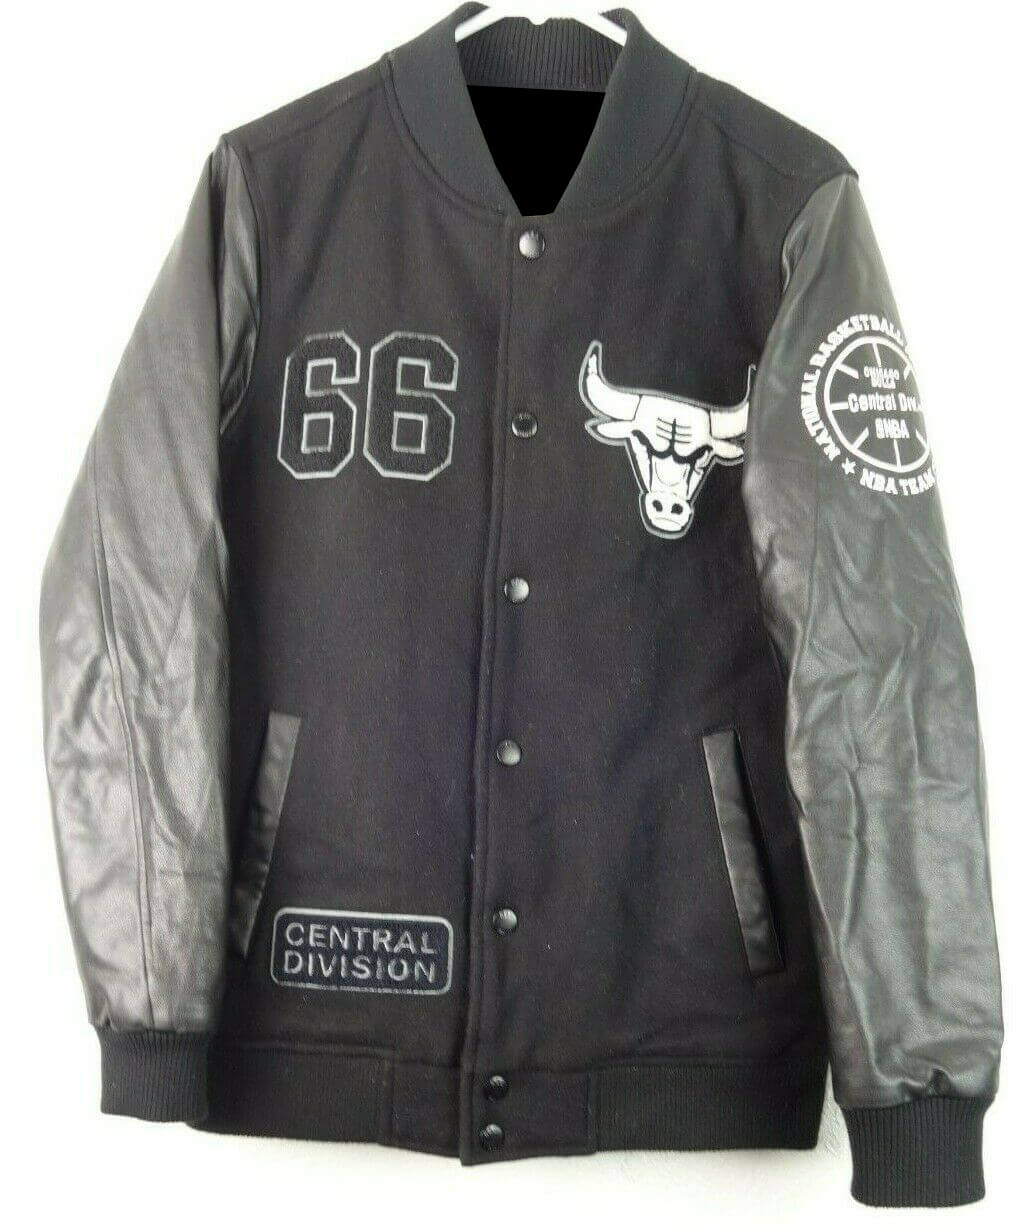 Chicago Bulls Silver Jacket